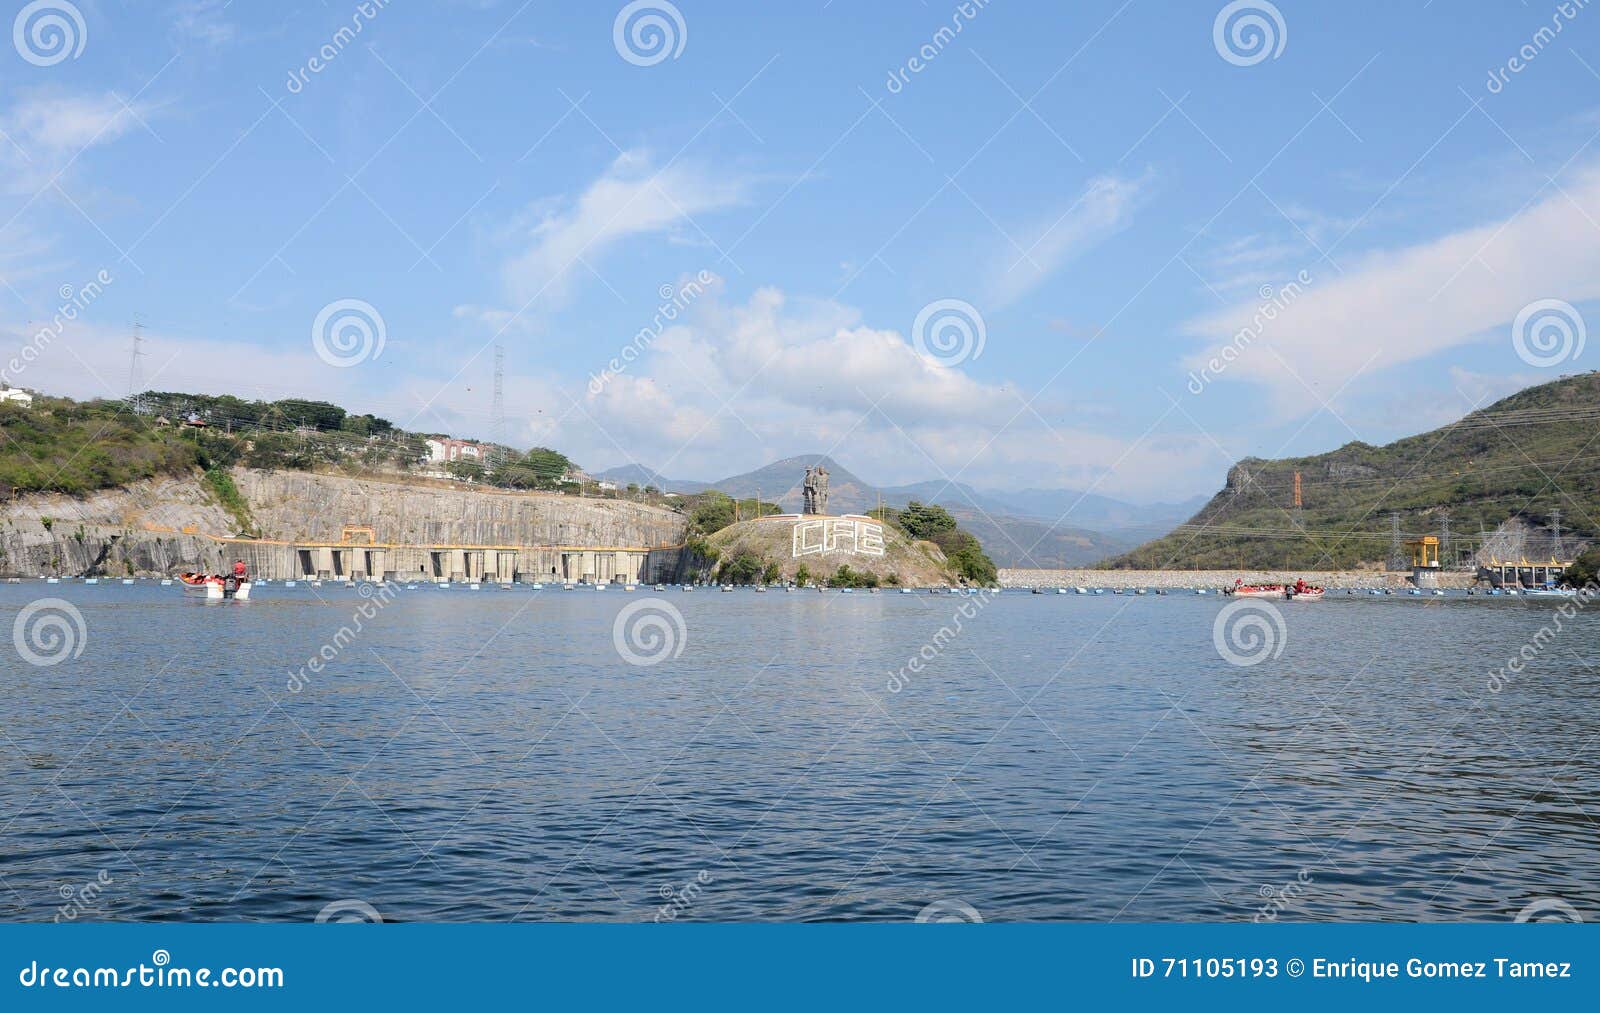 chiapas mexico chicoasen hydroelectric plant